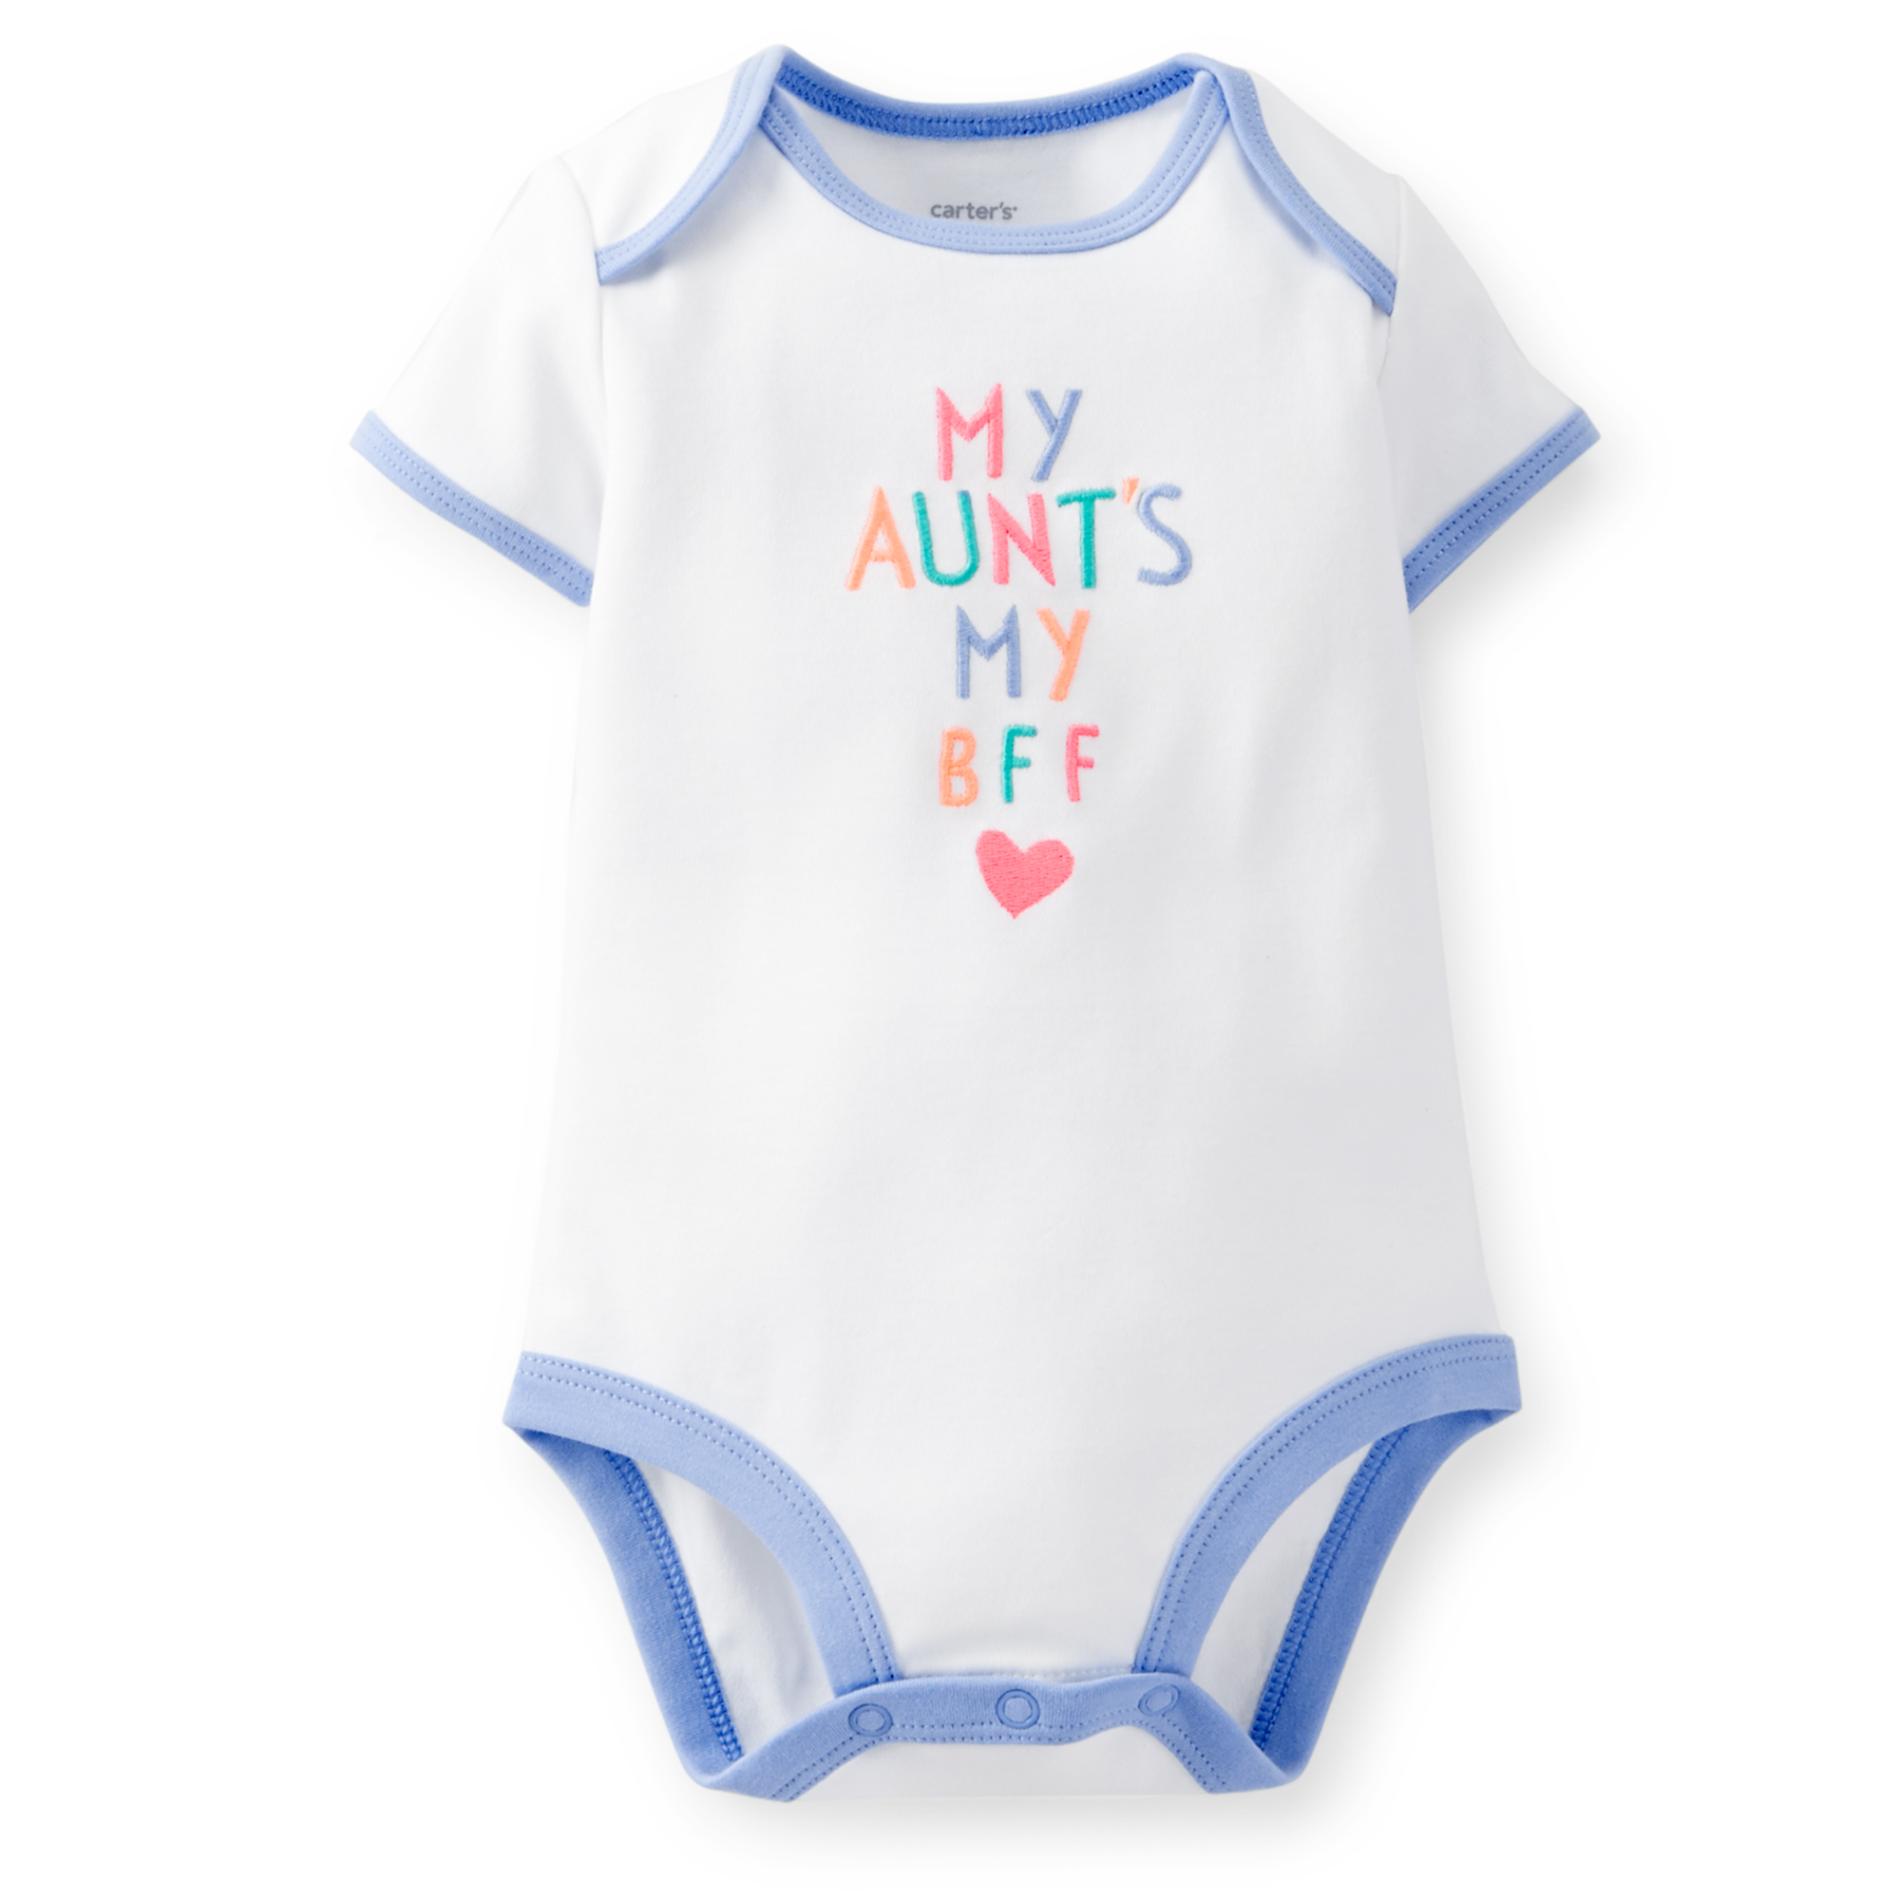 Carter's Newborn & Infant Girl's Graphic Bodysuit - Aunt's BFF